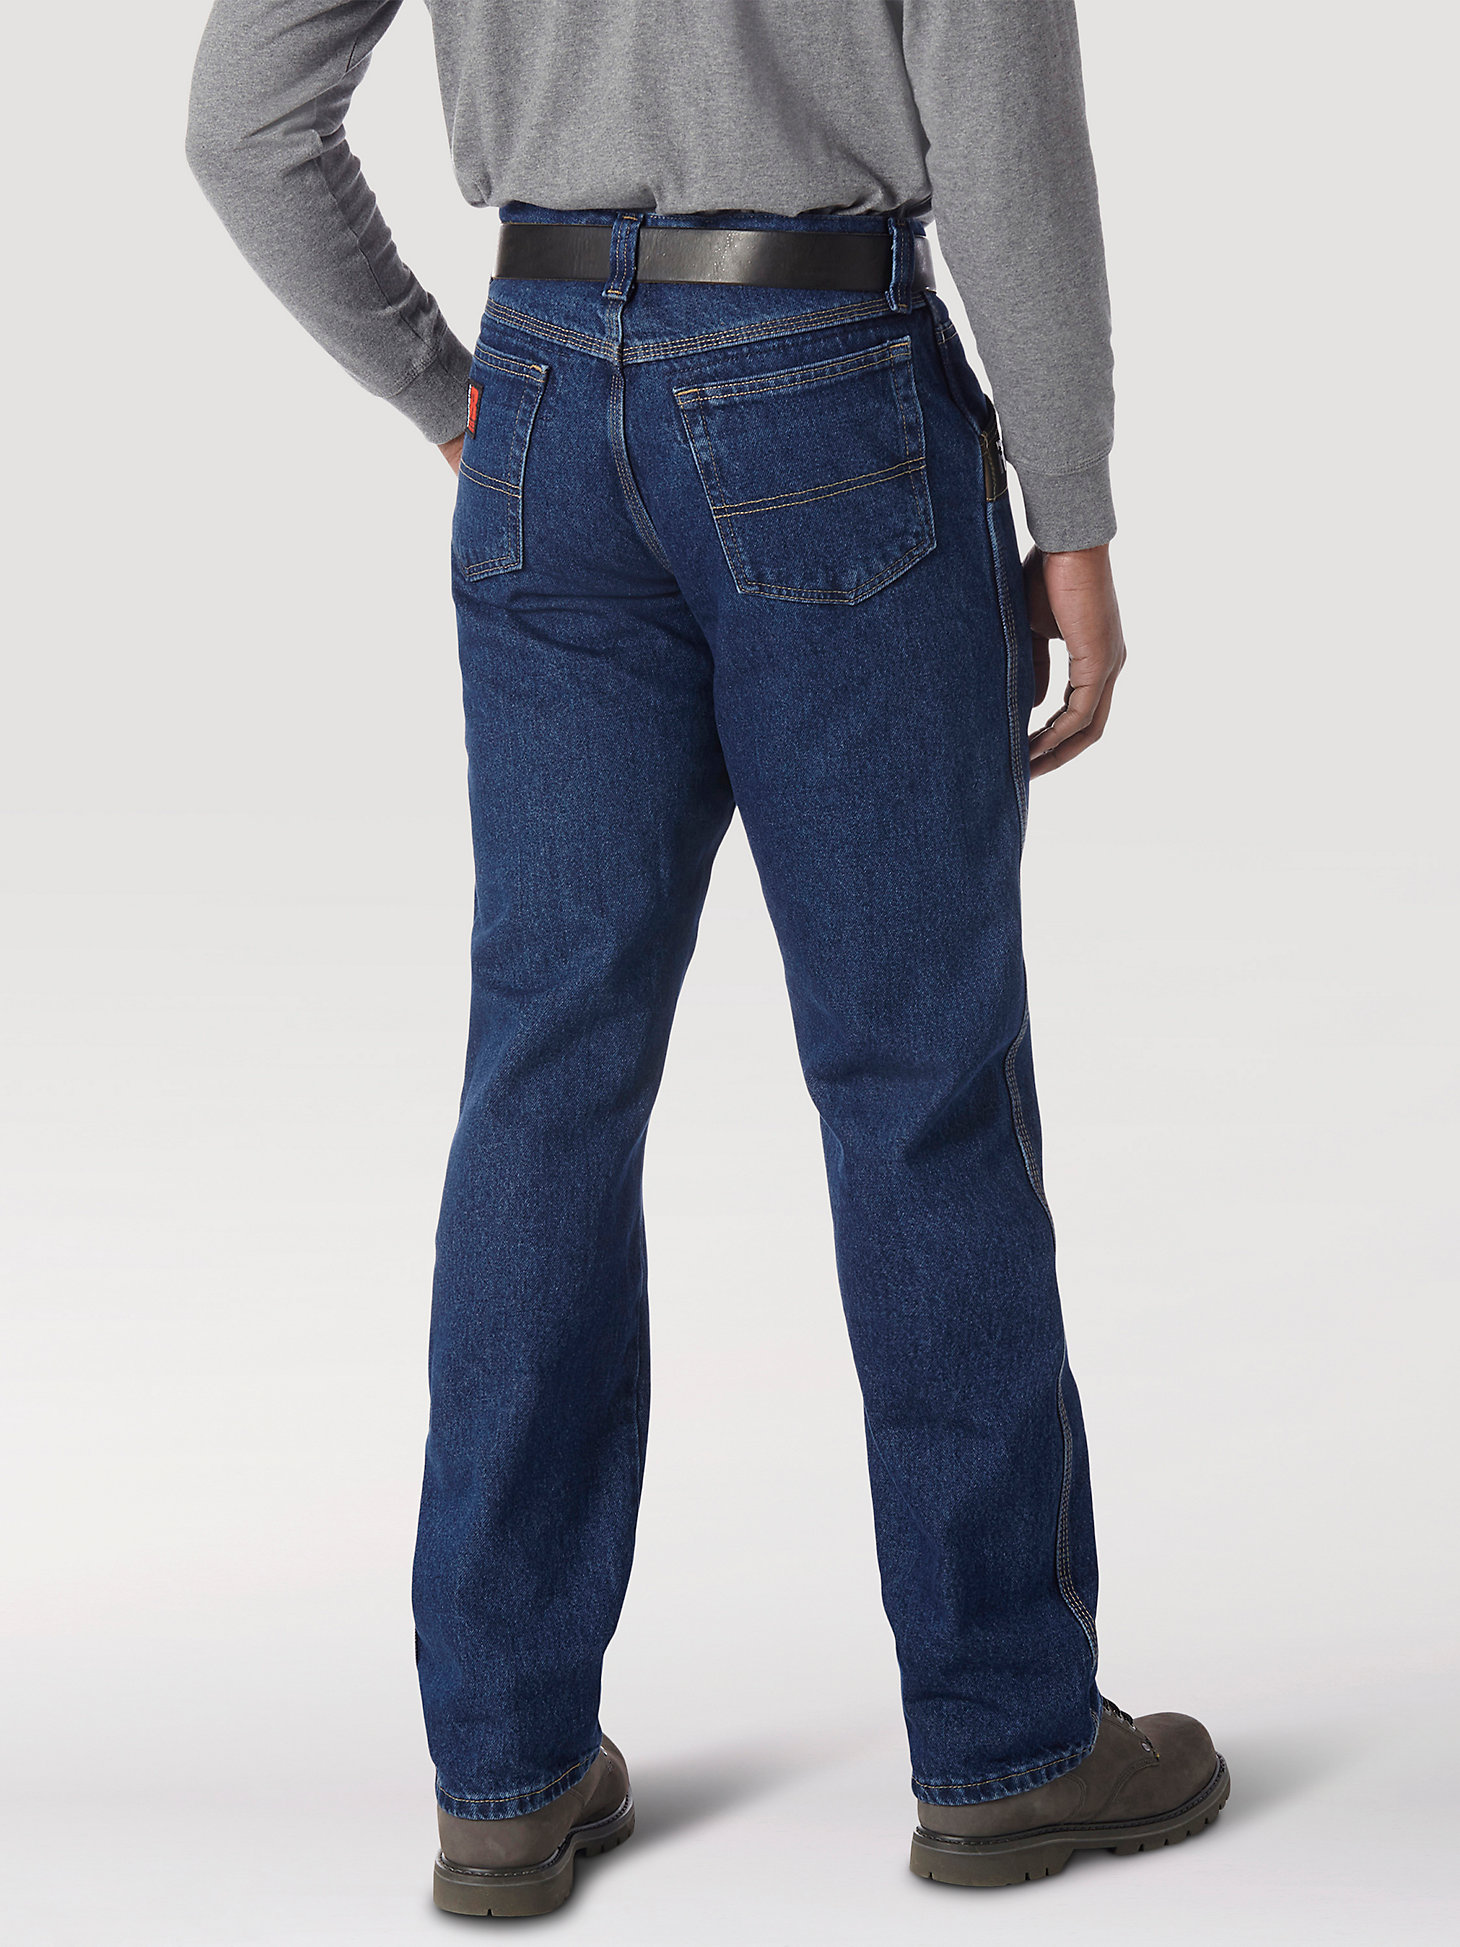 Wrangler® RIGGS Workwear® Five Pocket Jean in Antique Indigo